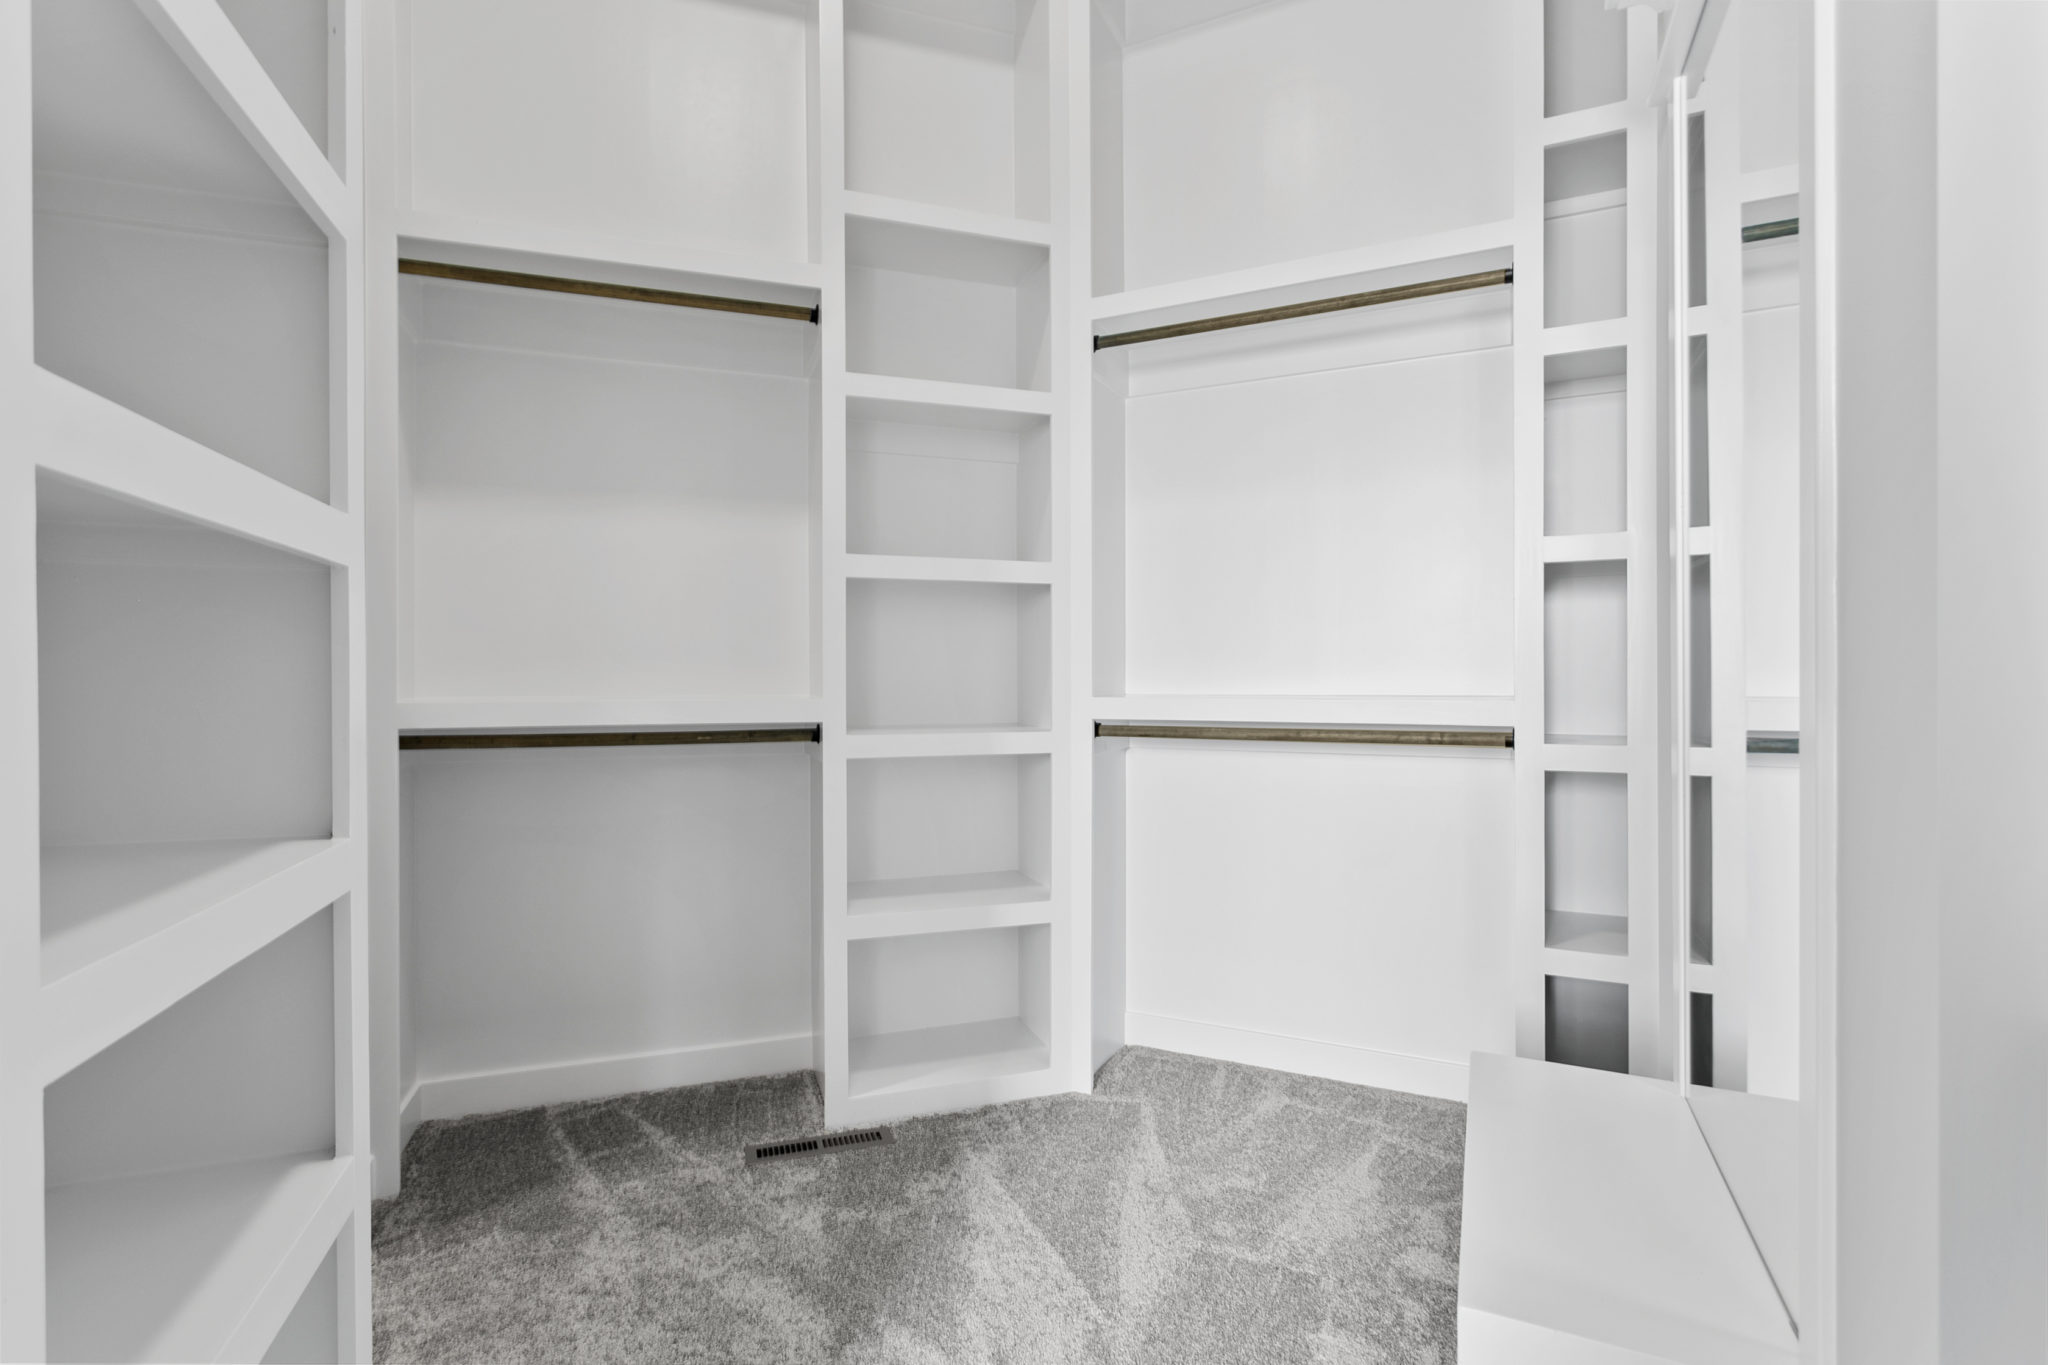 Roosevelt reverse 1.5-story master bedroom walk-in closet